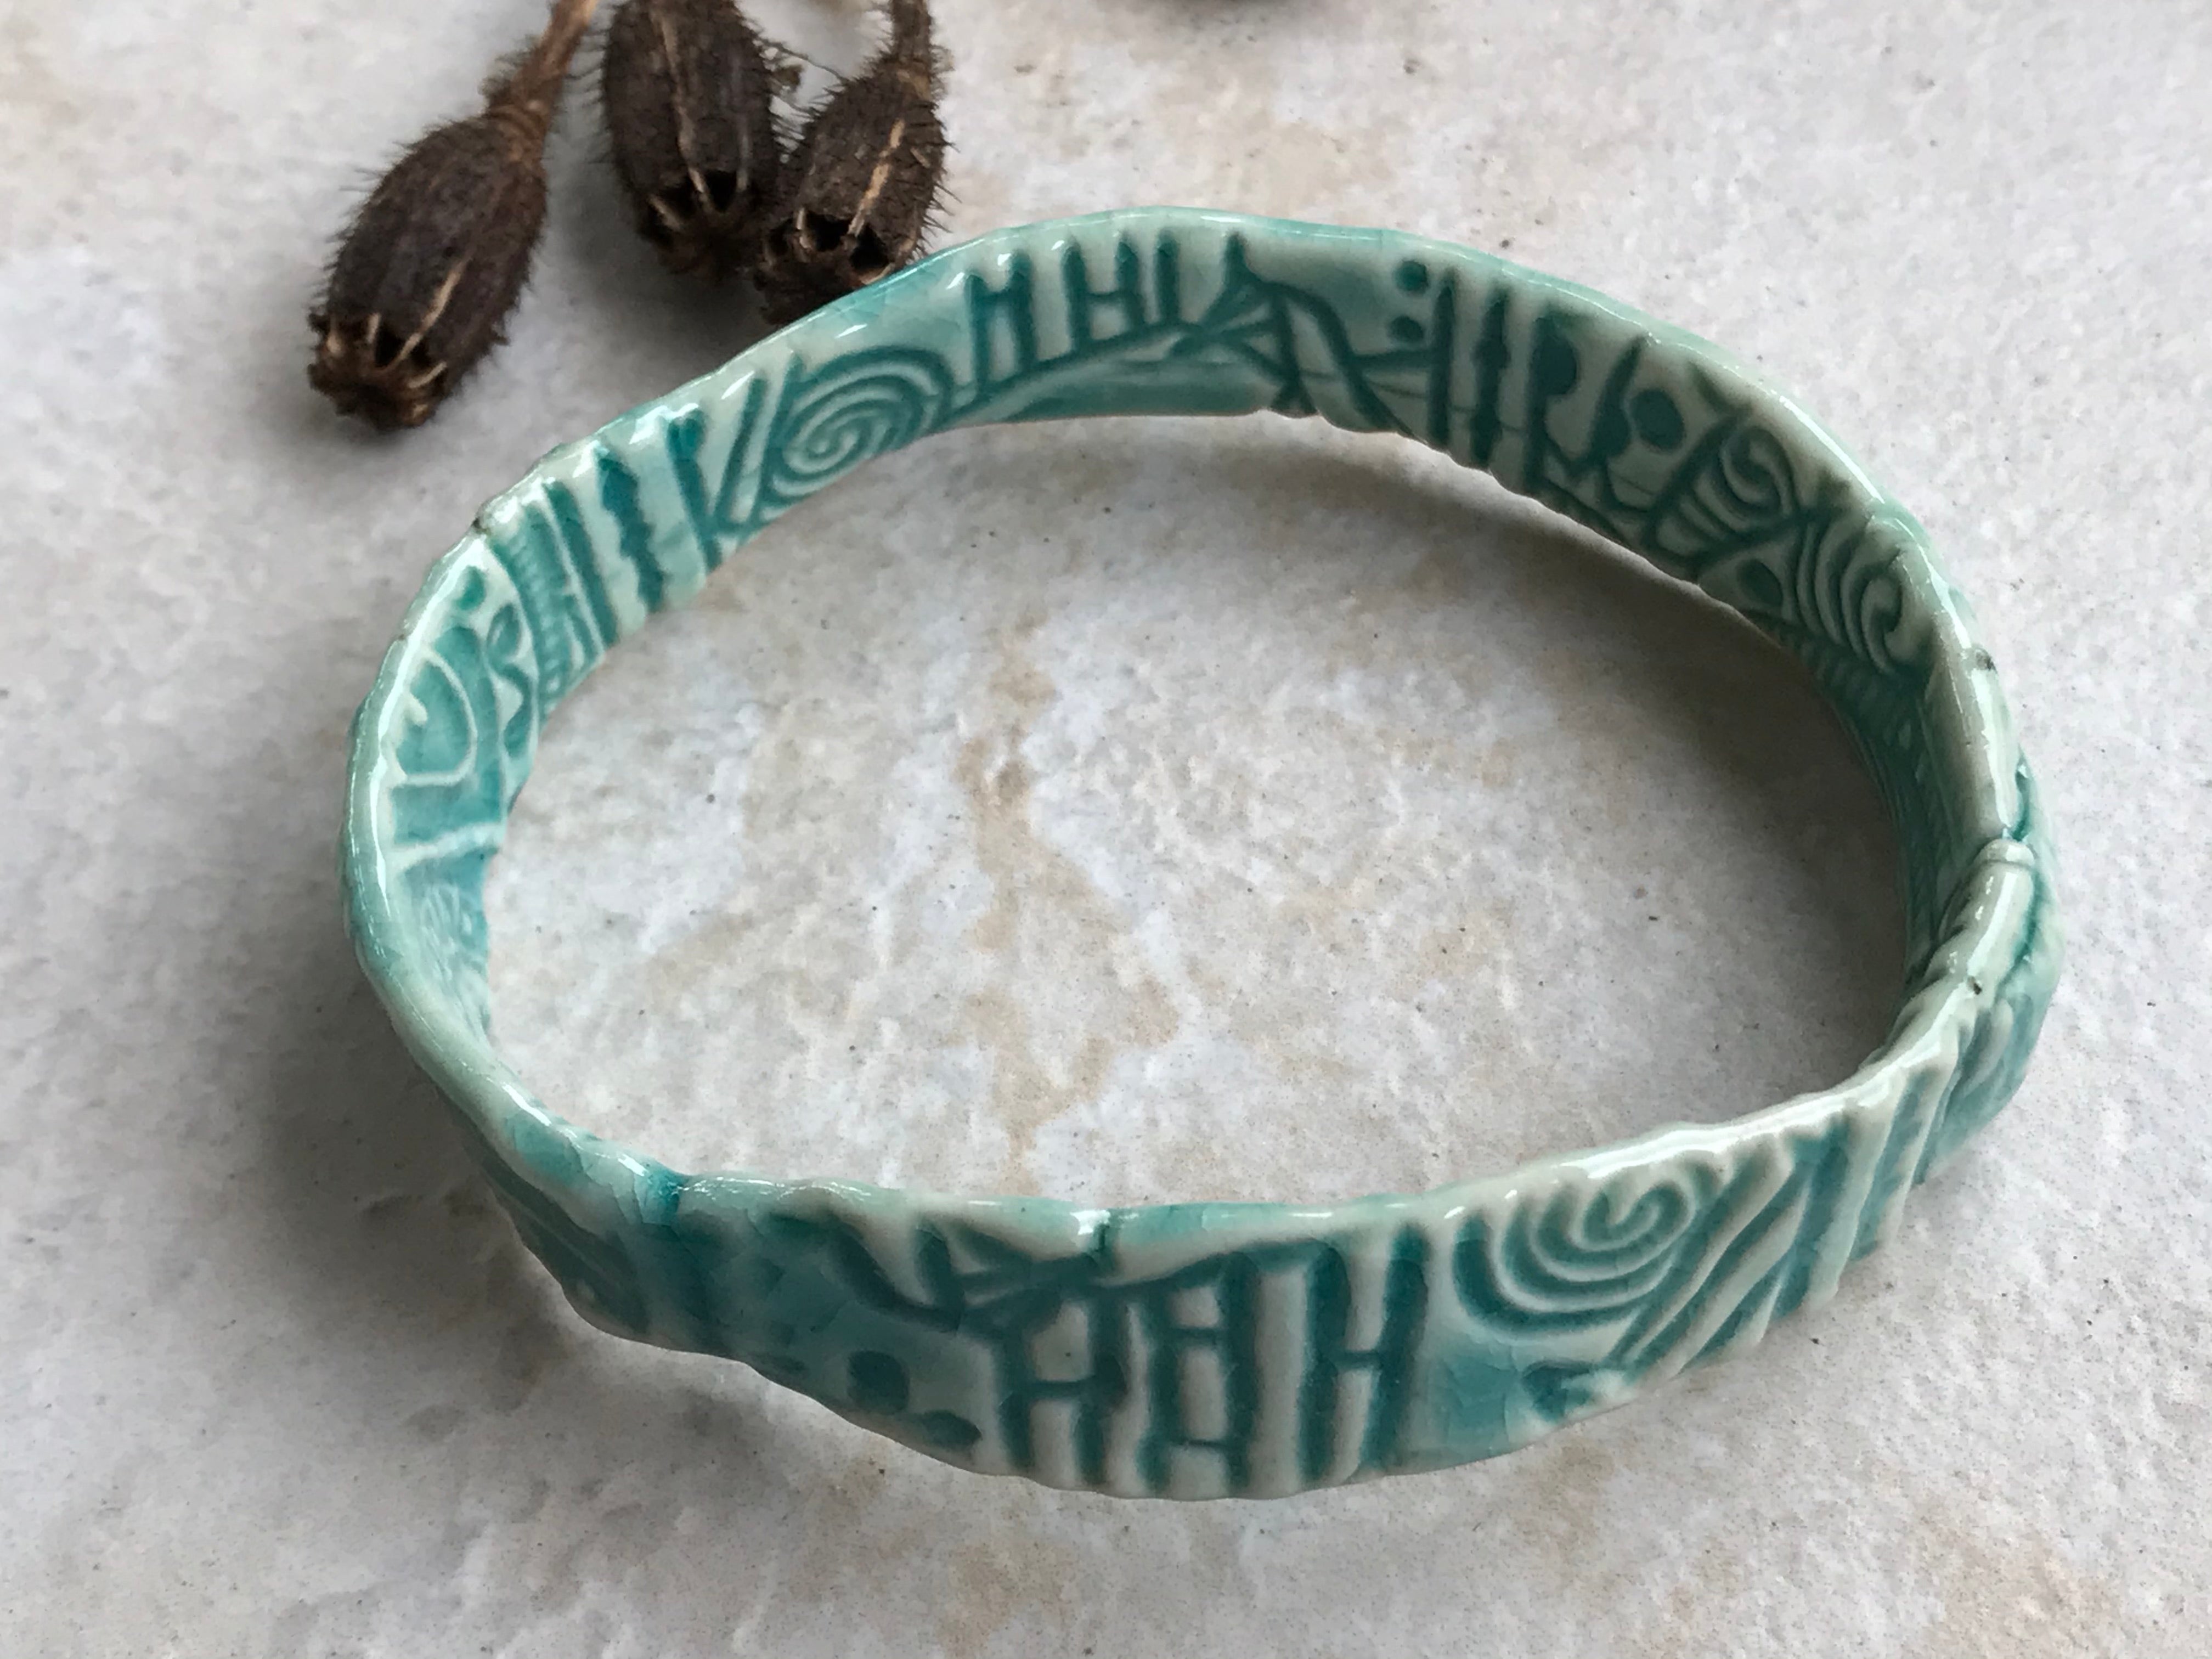 Quirky Turquoise Ceramic Bangle Bracelet